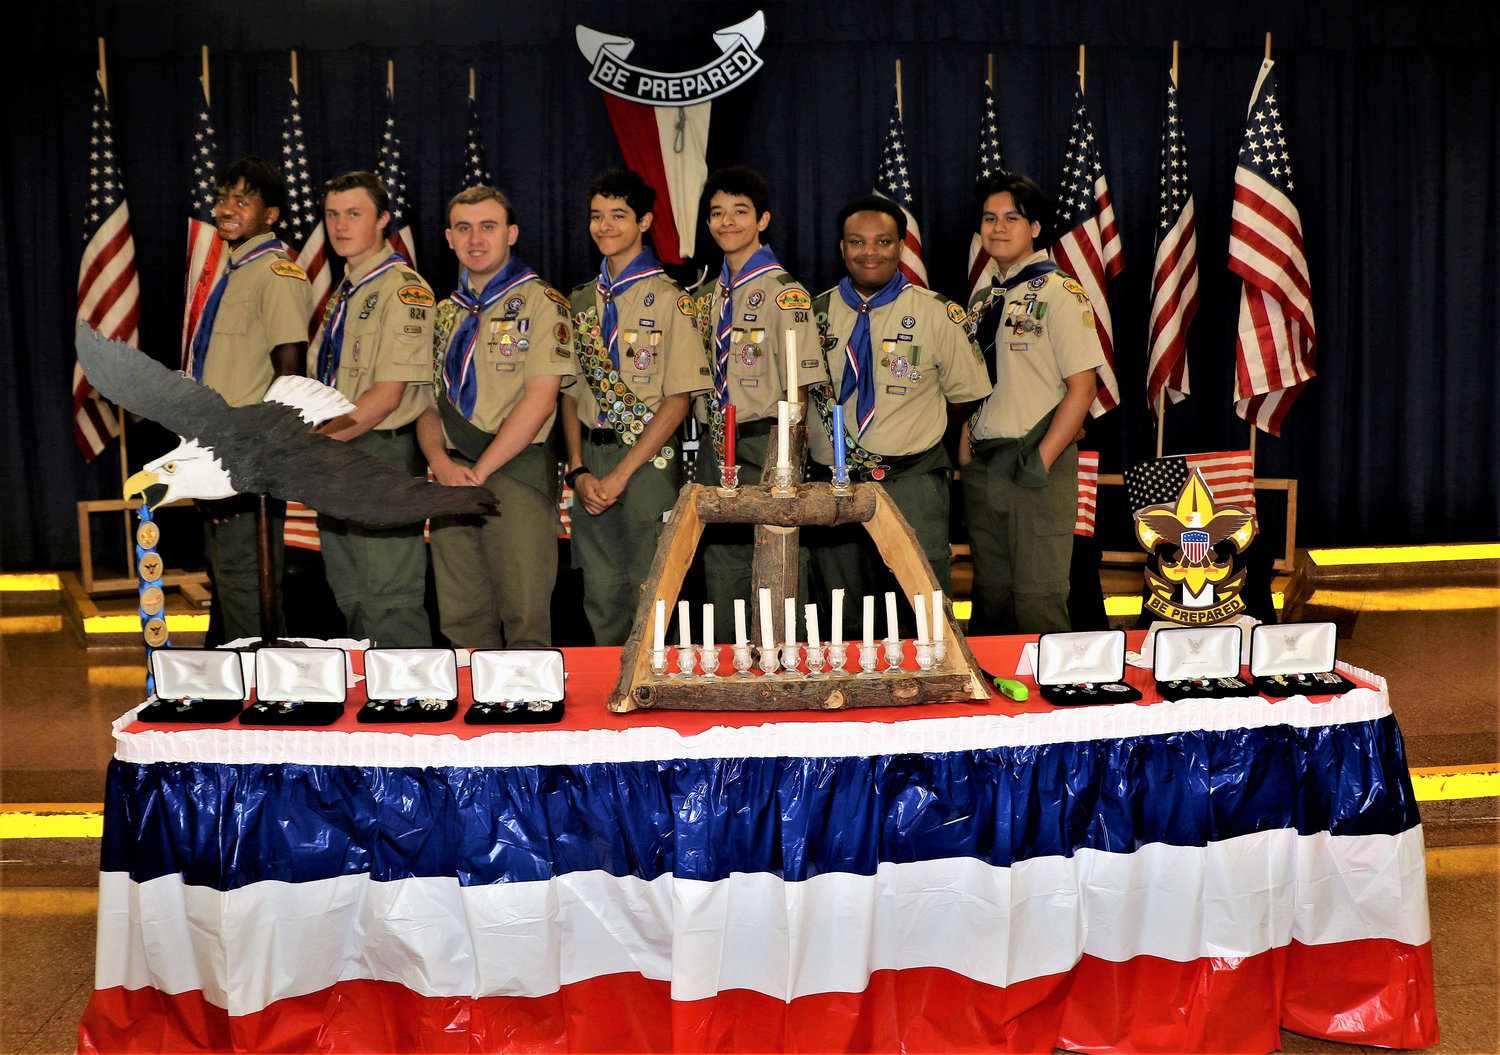 Eagle Scout Court of Honor - Troop 824; Matthew J. Mahoney, Kyle J. Pomerico, James E. Kastner, Carlos I. Santana, Antonio F. Santana, Trevor J. Bradley, and Jason D. Villarruel.